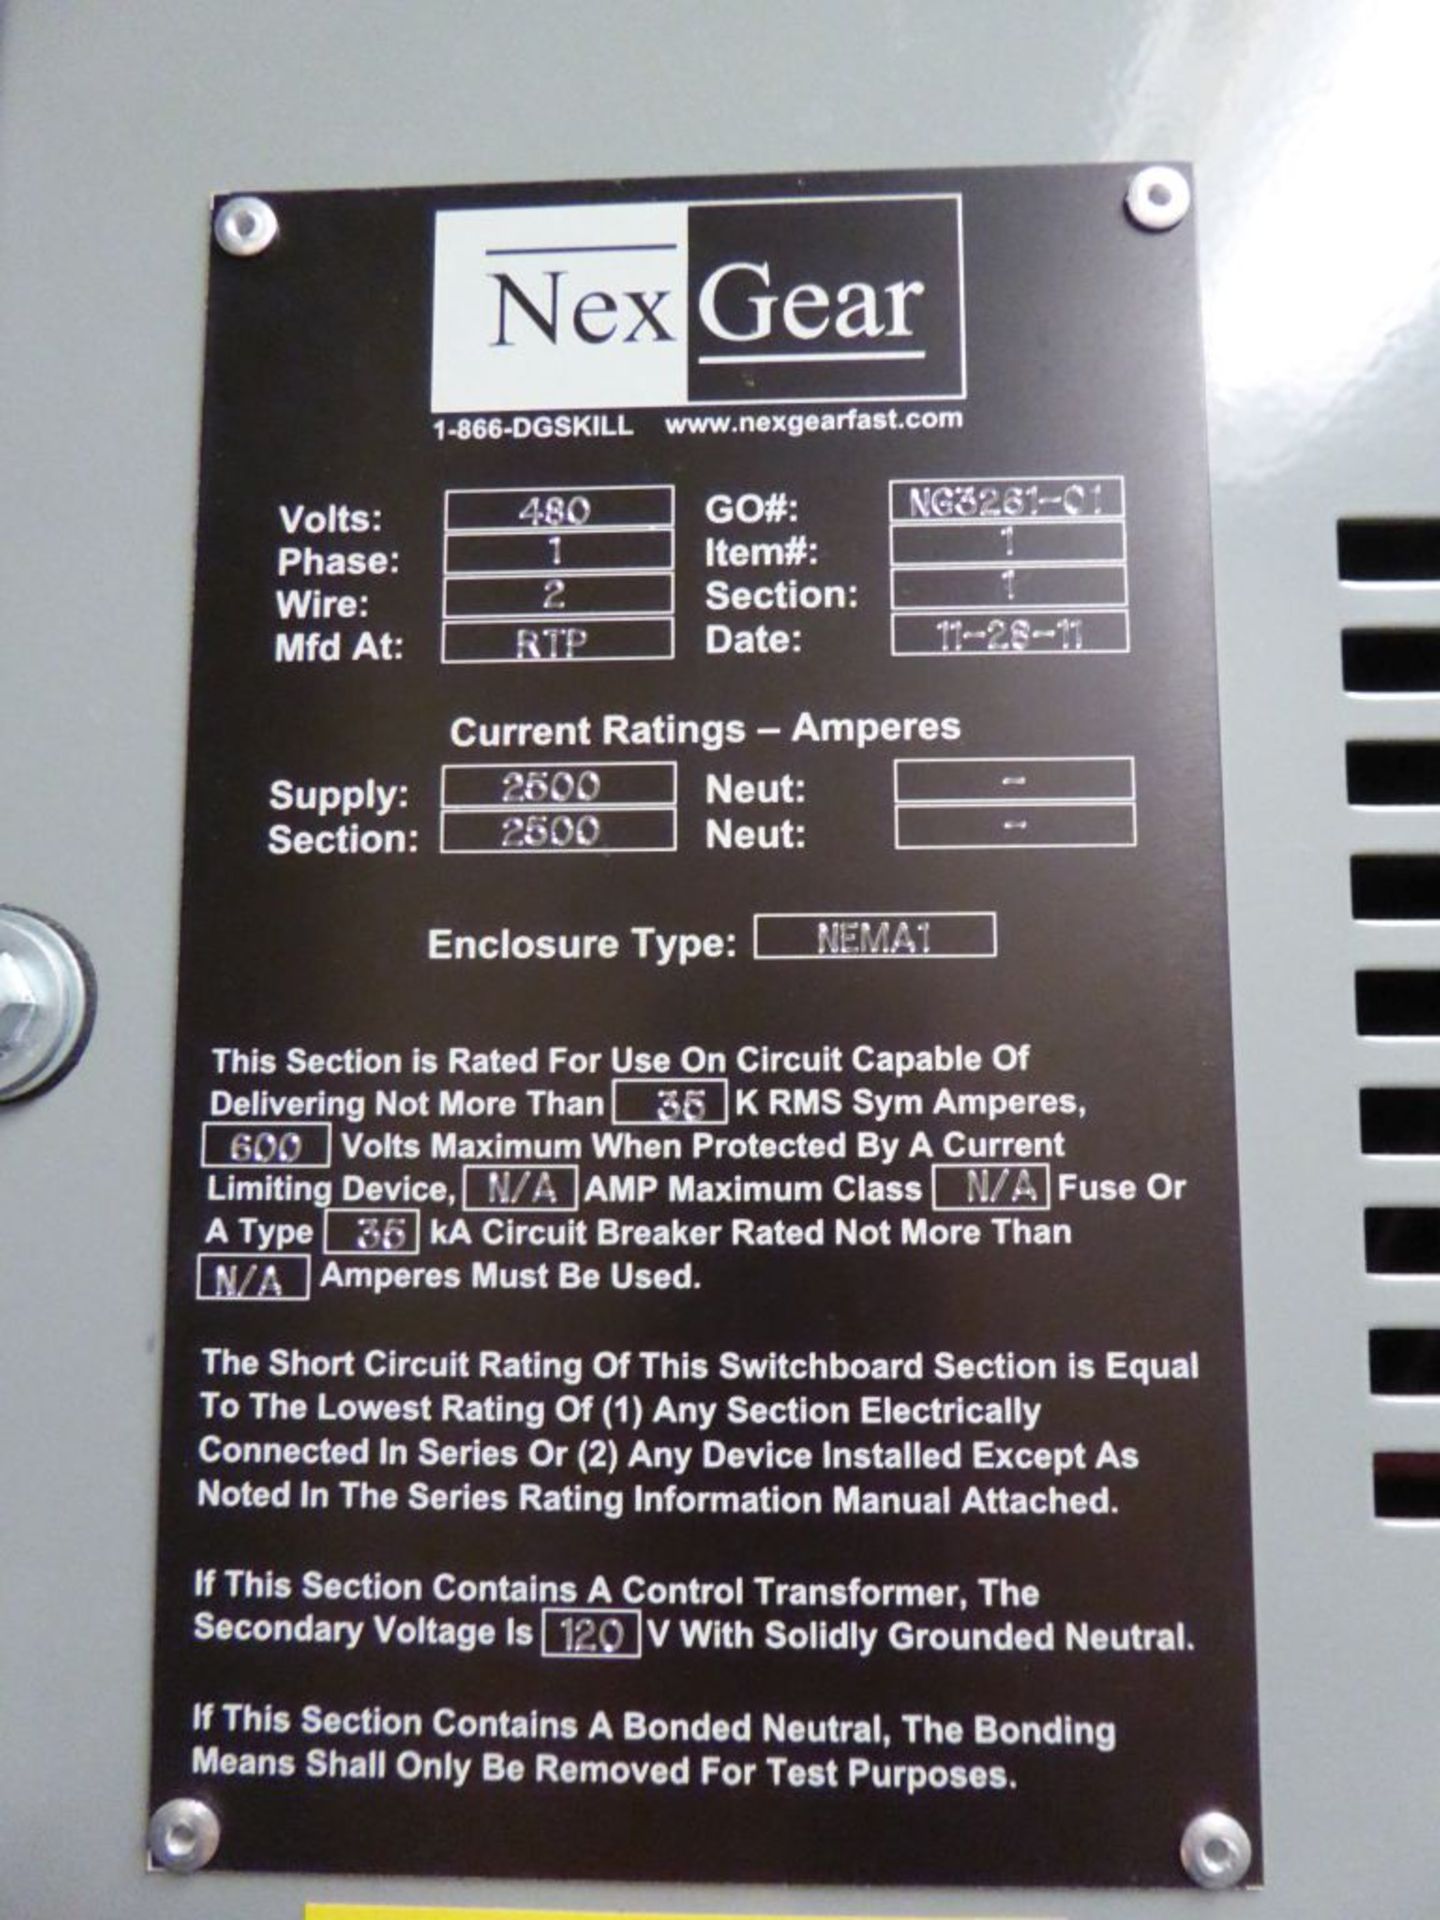 Charlotte, NC - NexGear 2500A Switchboard - Image 3 of 6